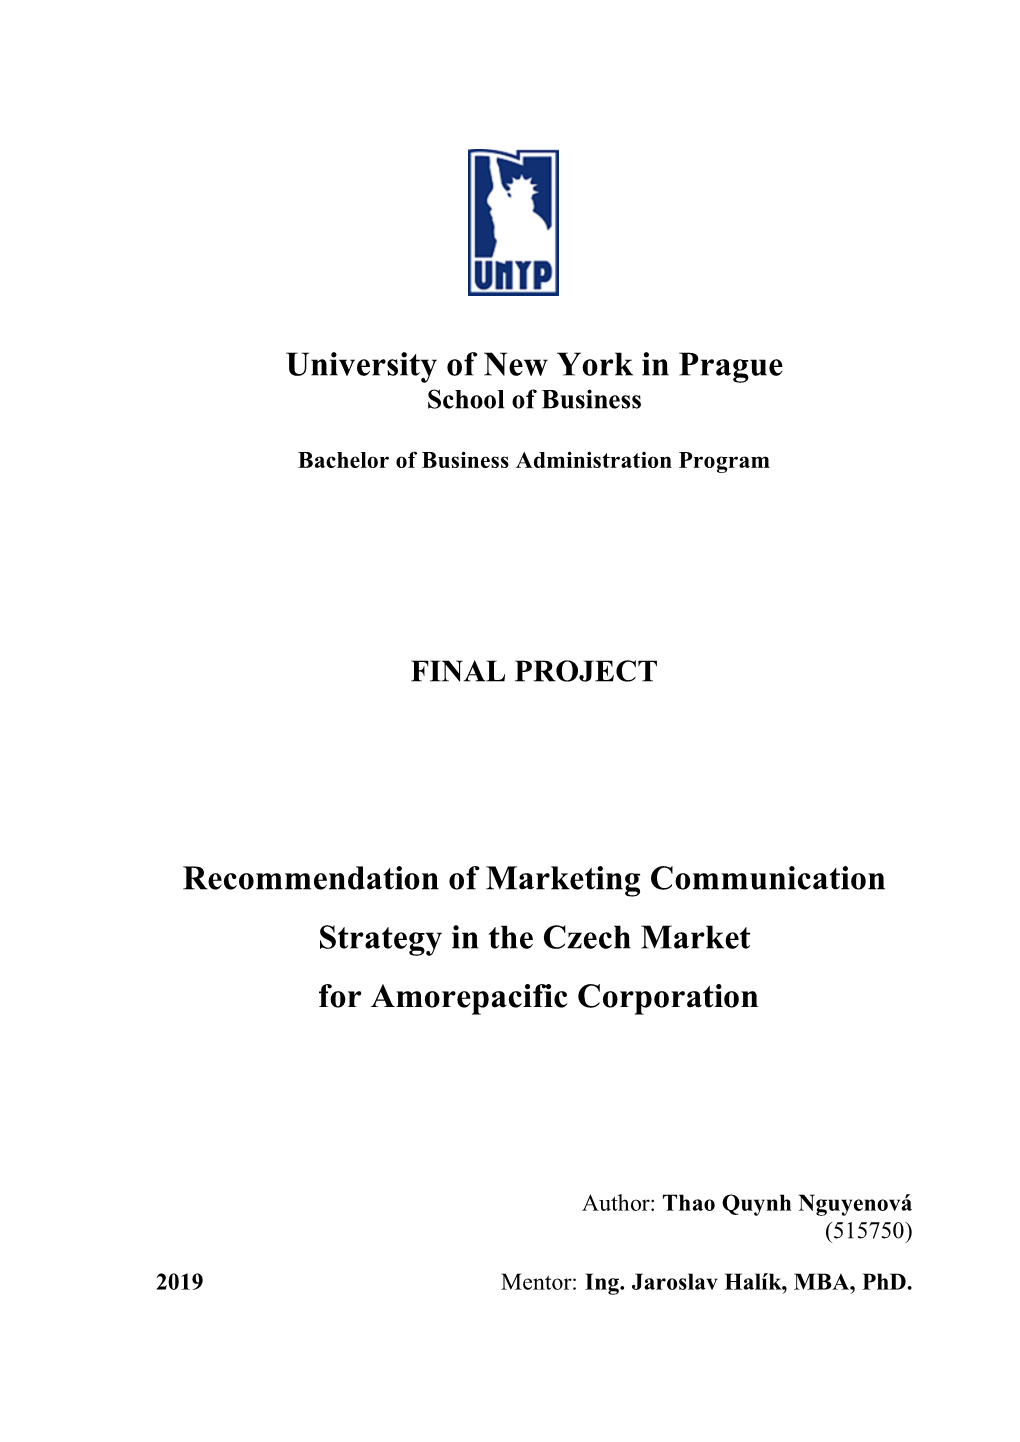 University of New York in Prague Recommendation of Marketing